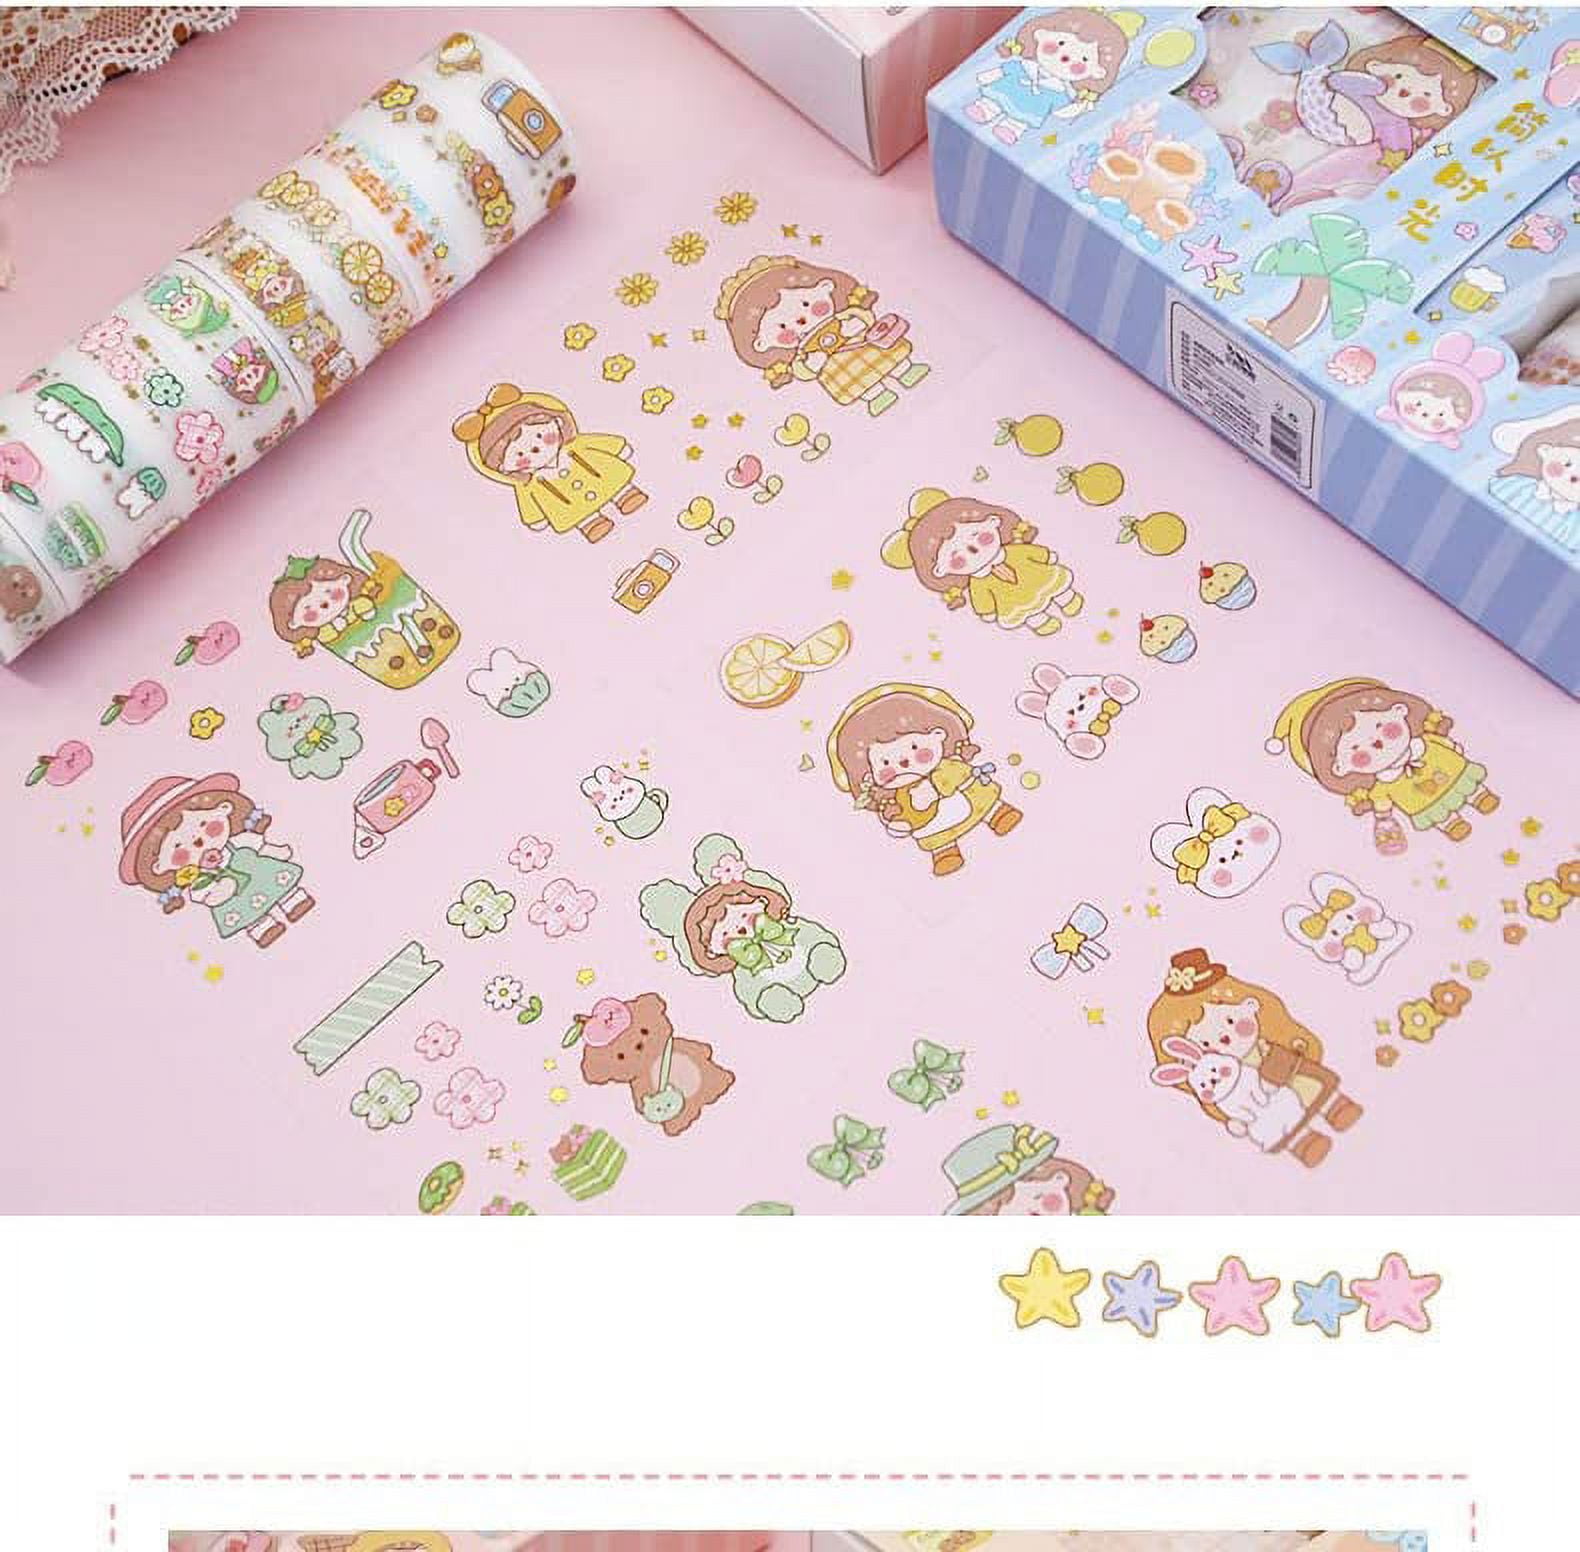 Ekoi Magical Theme Washi Tape - 8 Rolls 15 mm Cute Kawaii Gold Print Cartoon Design Decorative Masking Sticky Japanese Duct Tape Stickers for